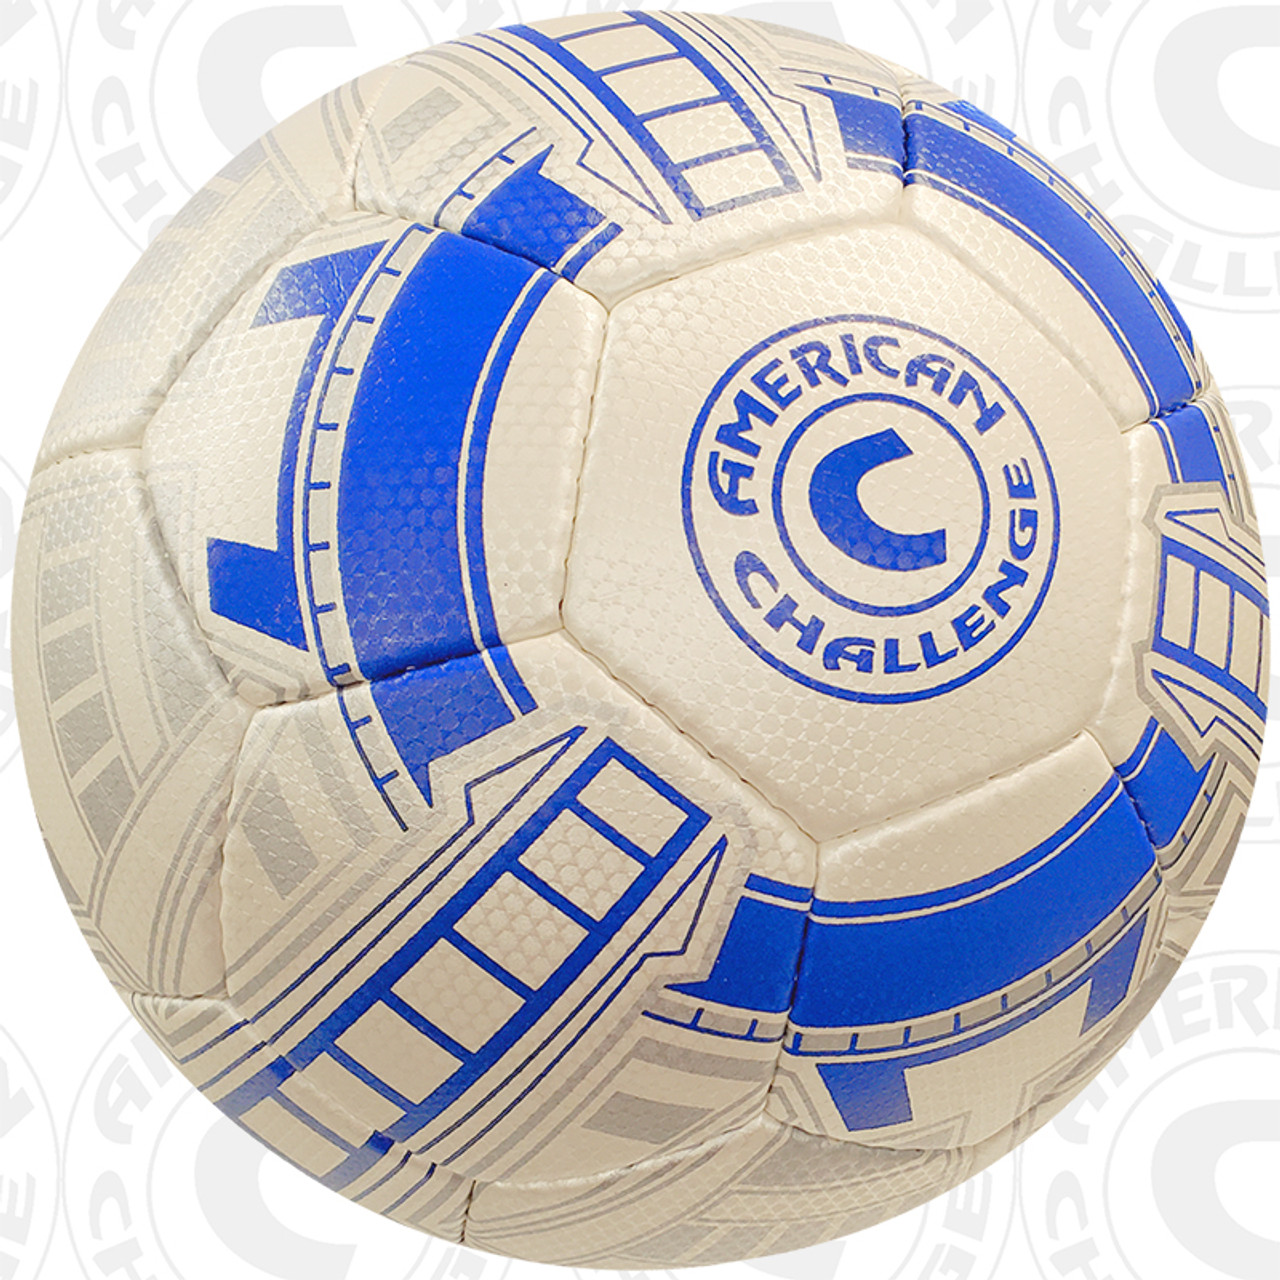 American Challenge Brasilia Soccer Ball Size 2 & Size 3 & Size 4 & Size 5 -  Match Soccer Ball - 5 Colors - Kids, Youth & Adult Soccer Players